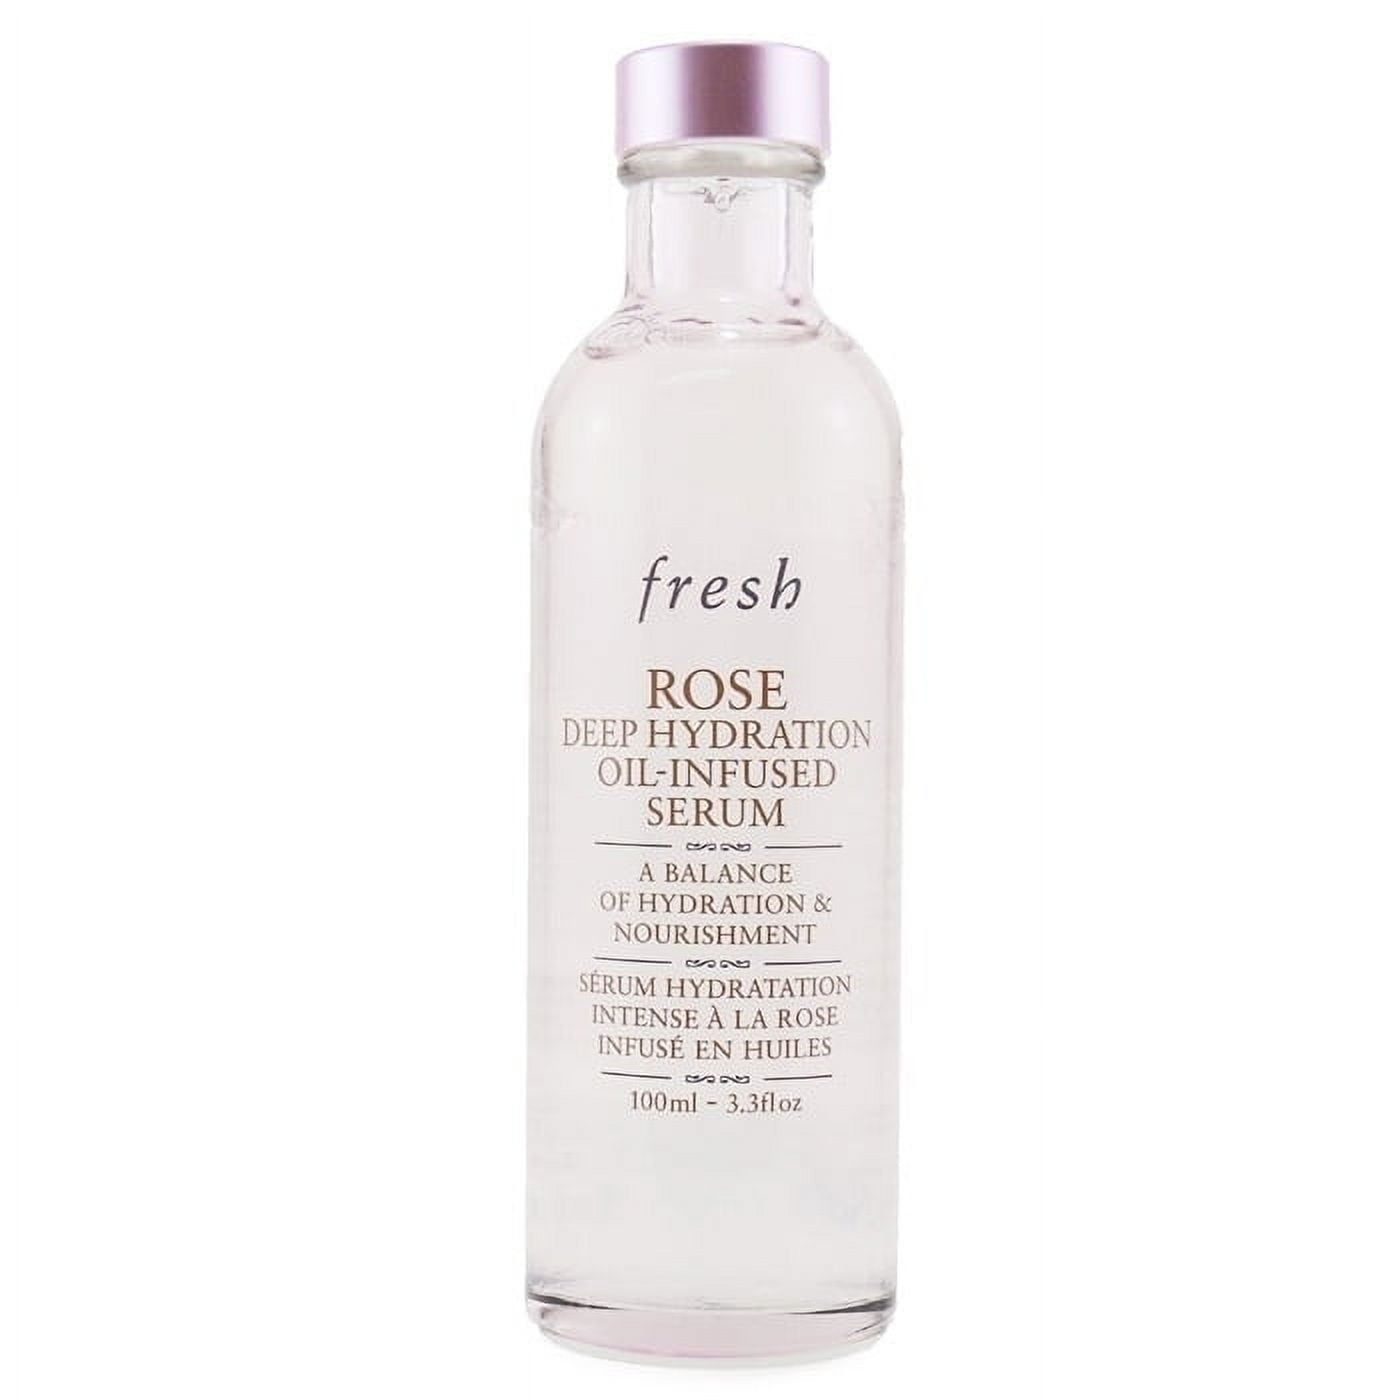 Fresh Holiday Rose Deep Hydration Skincare Gift Set